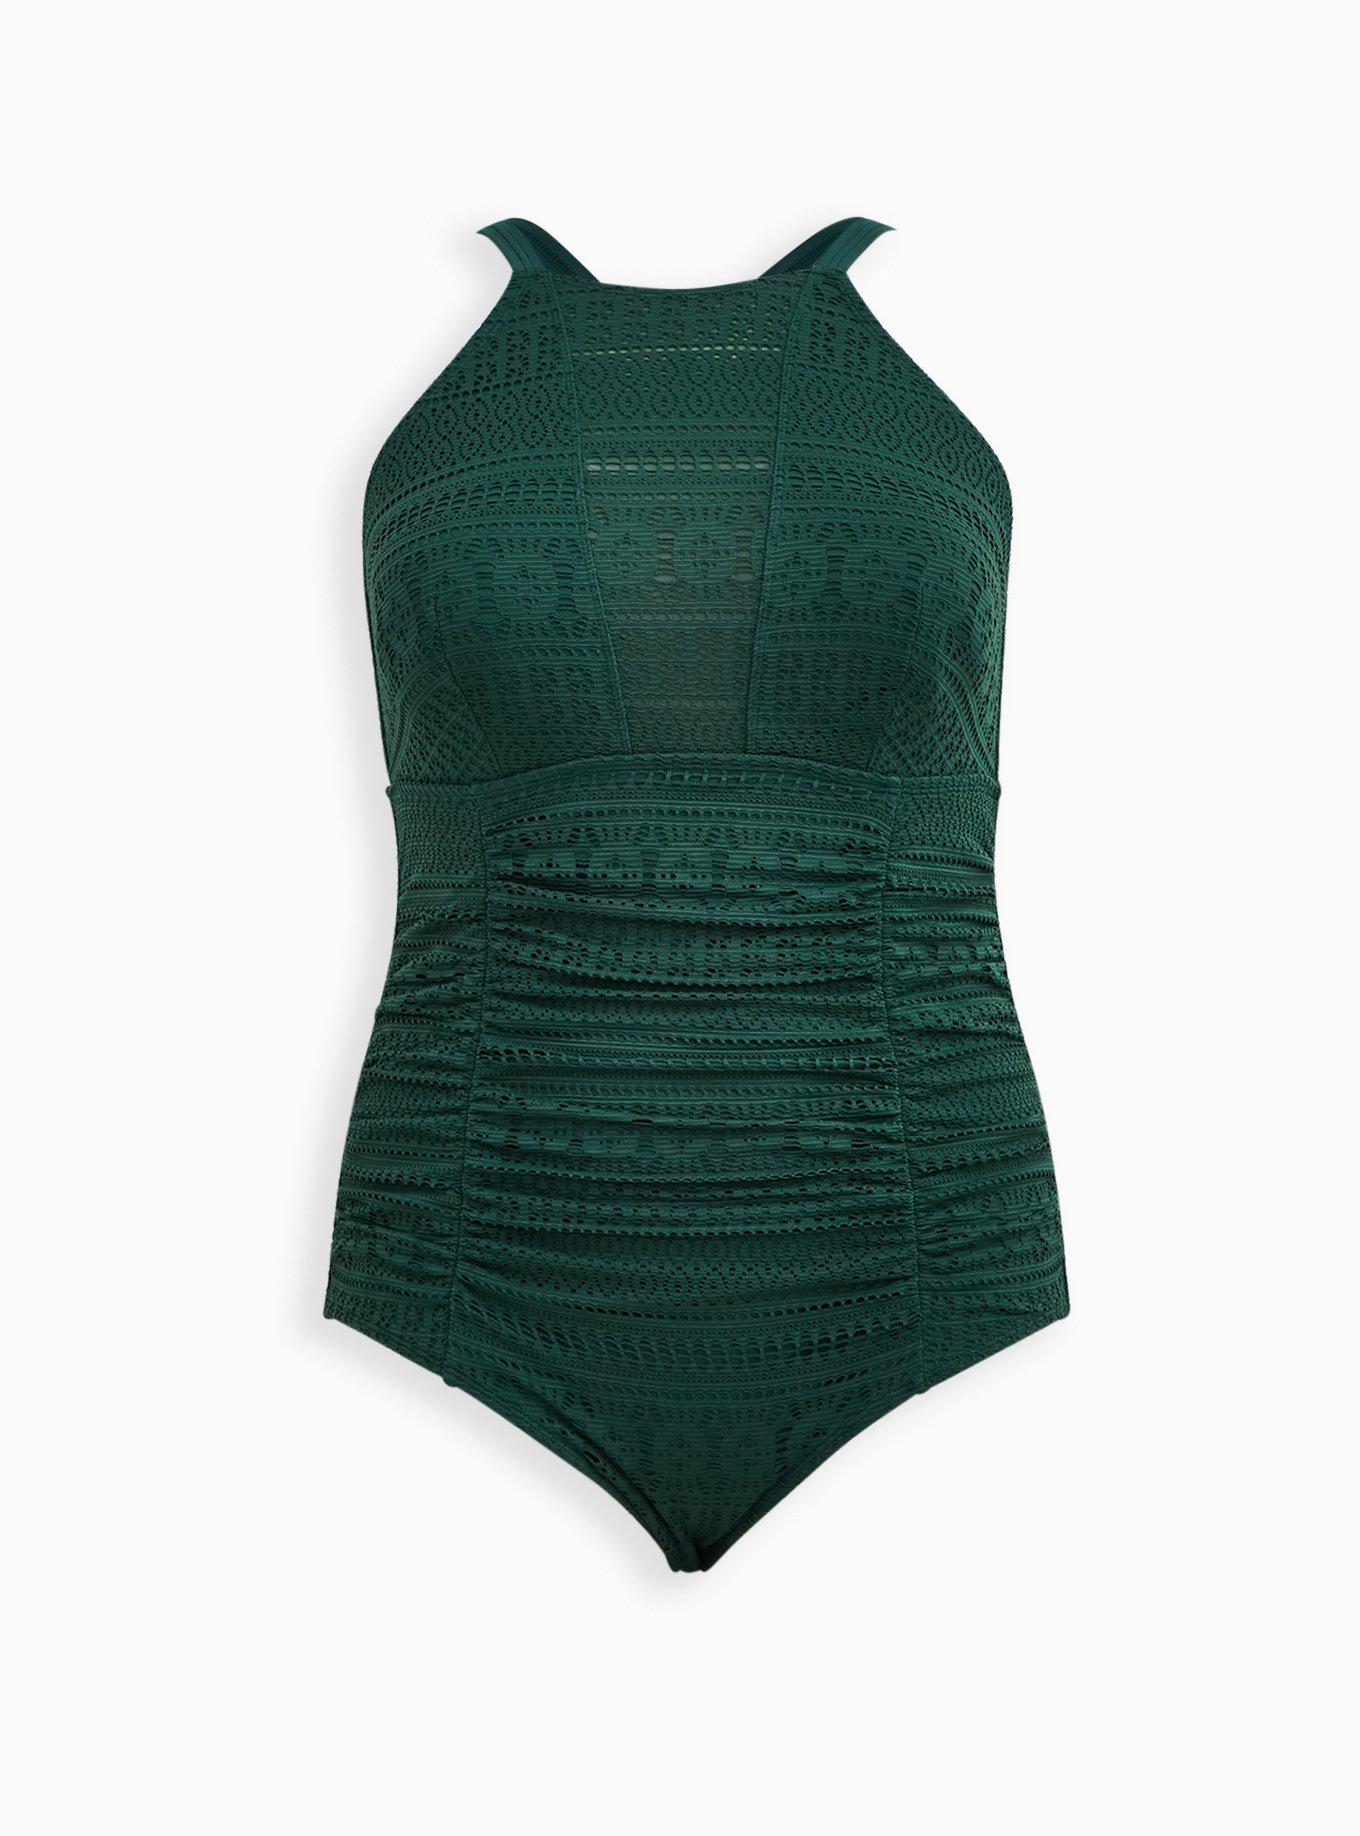 TORRID Vixen Swimsuit One-Piece Green Palm Mesh Cutout Size 0 (size 12) NWT